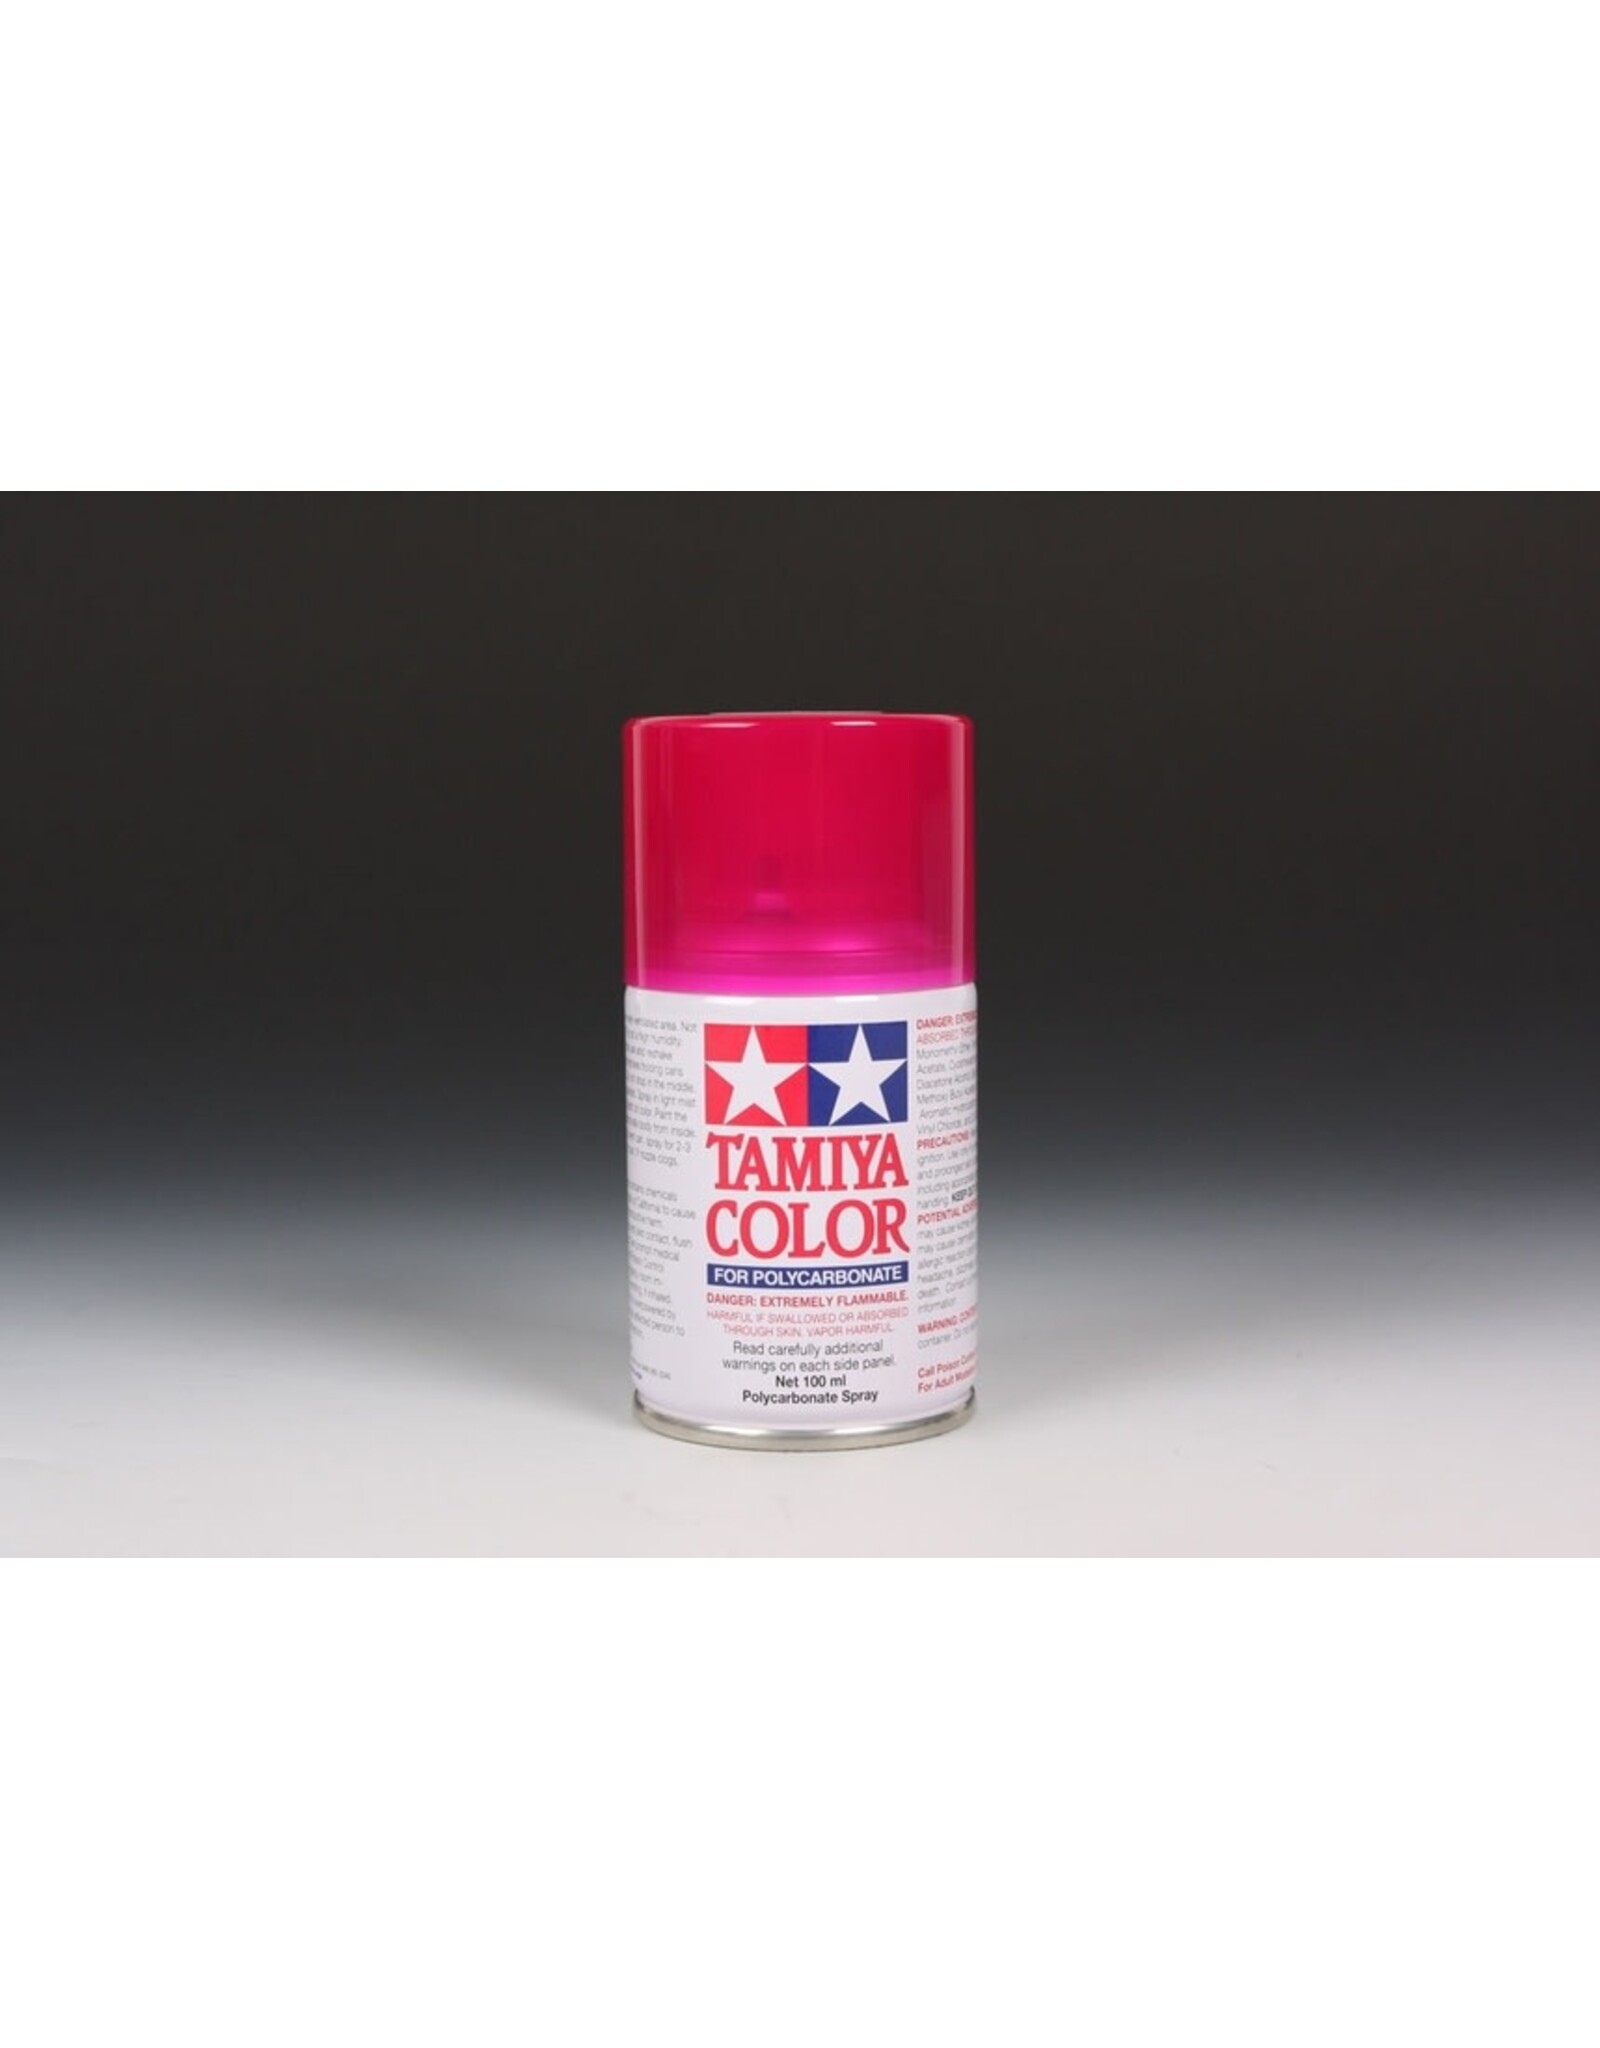 Tamiya PS-40 Translucent Pink Spray Paint, 100ml Spray Can